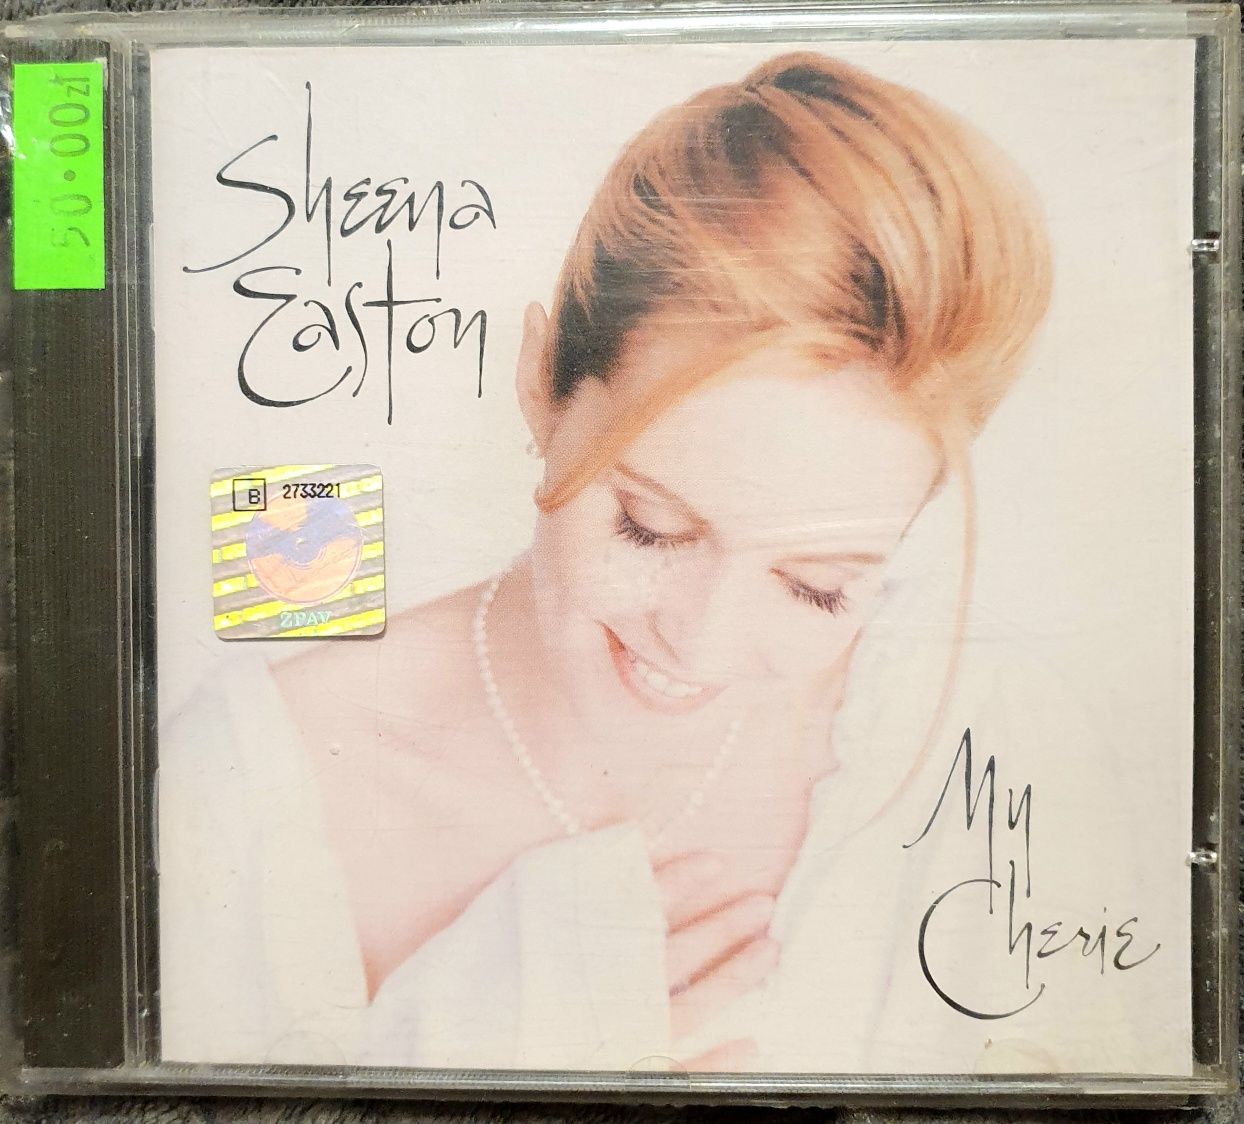 Sheena Easton - płyta cd